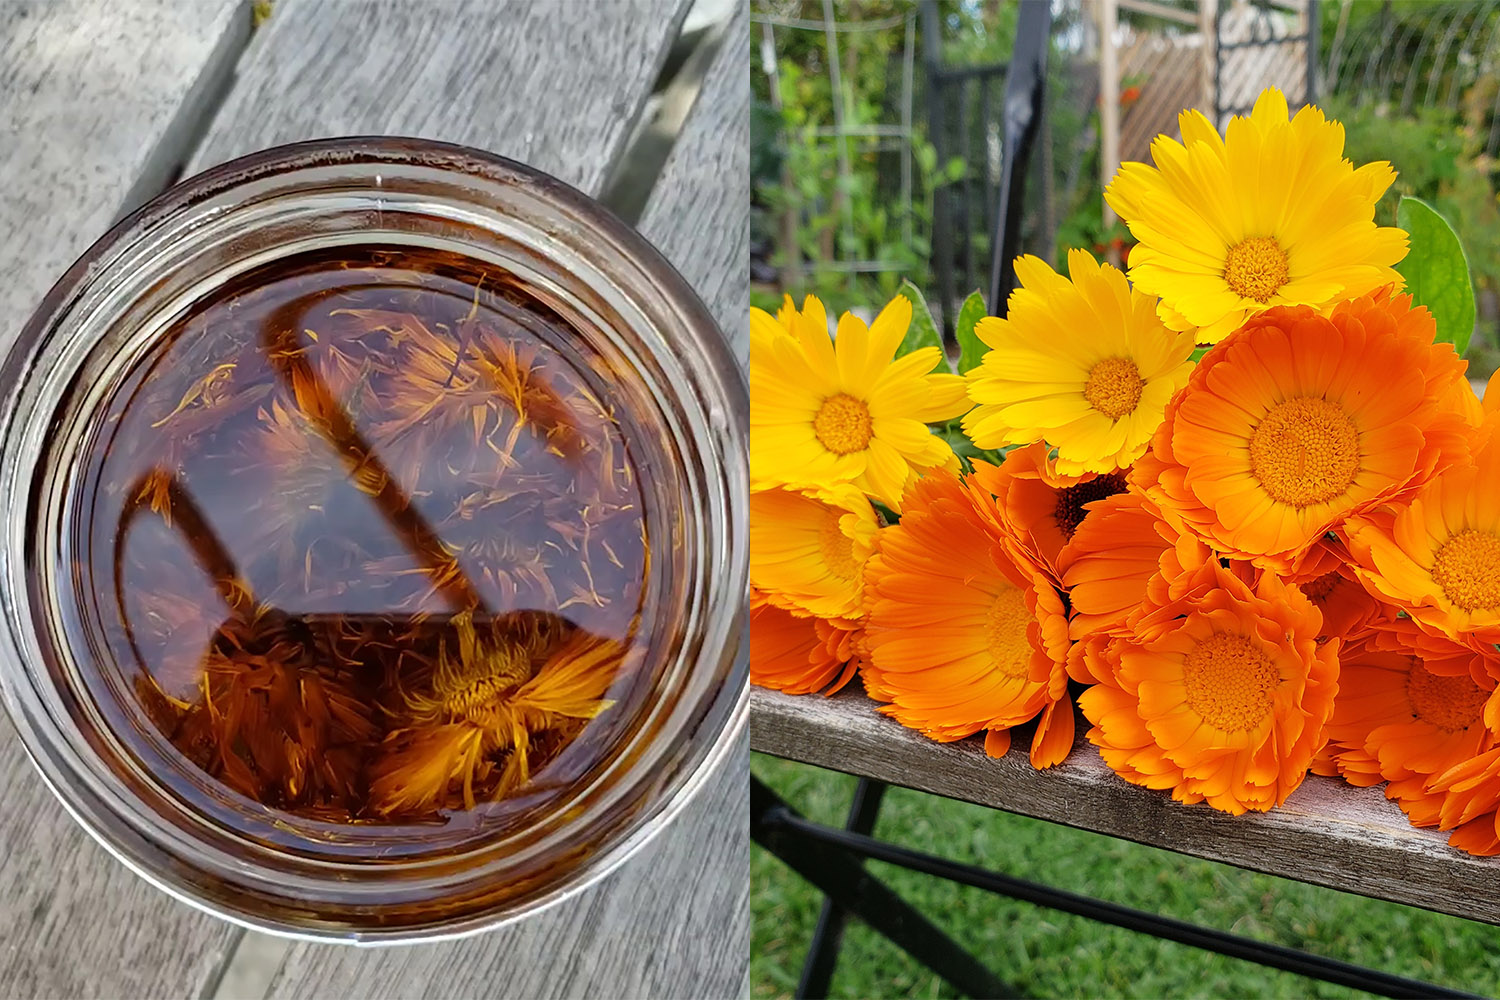 How to Grow Calendula Flowers - Planting and Harvesting Pot Marigolds